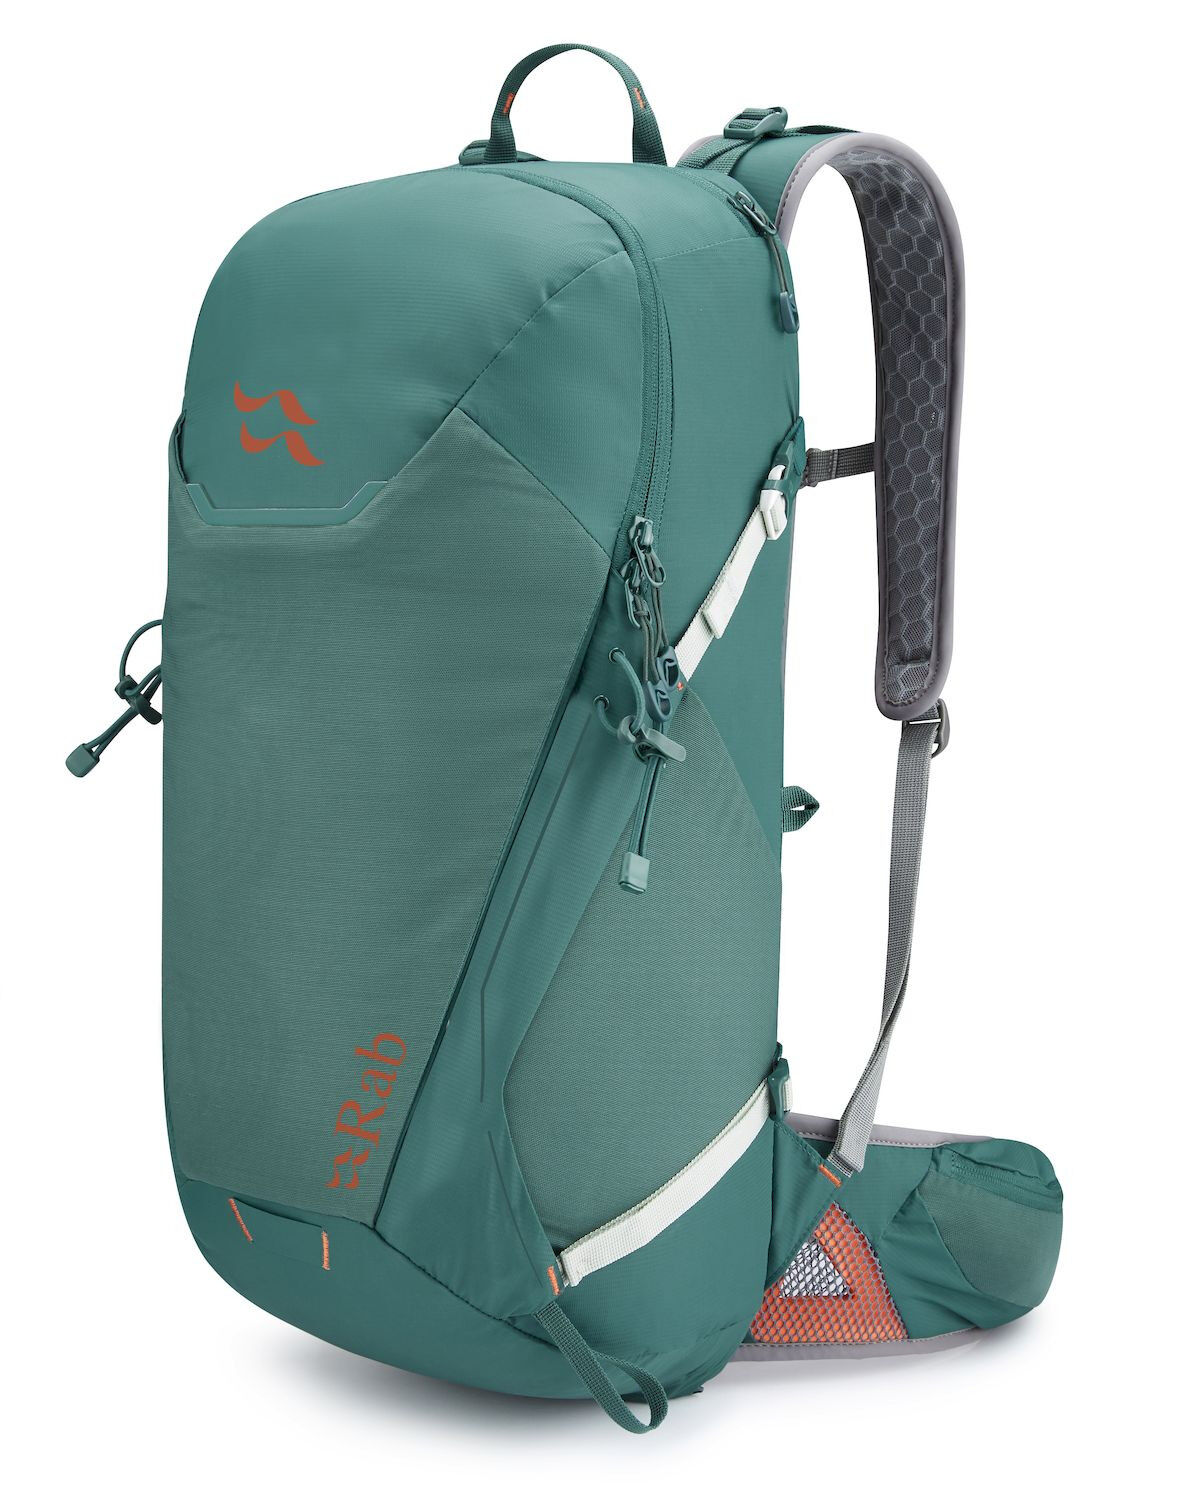 Rab Aeon27 - Walking backpack - Men's